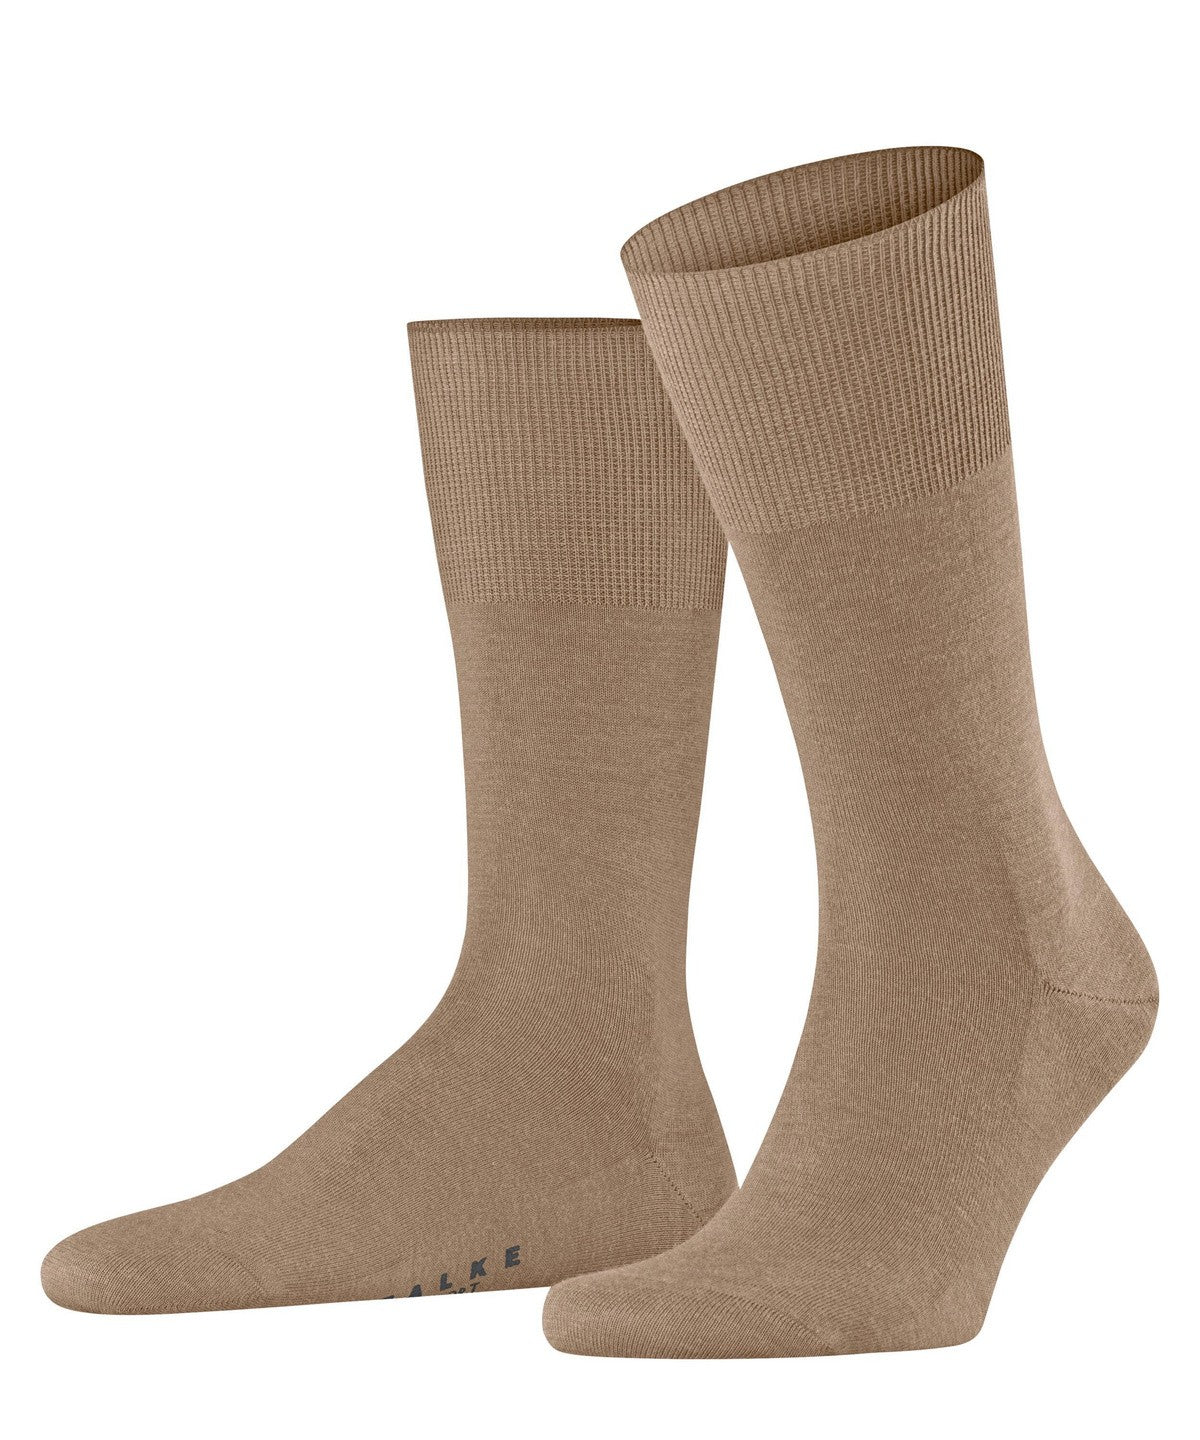 Falke Airport Wool Cotton Blend Socks Tan